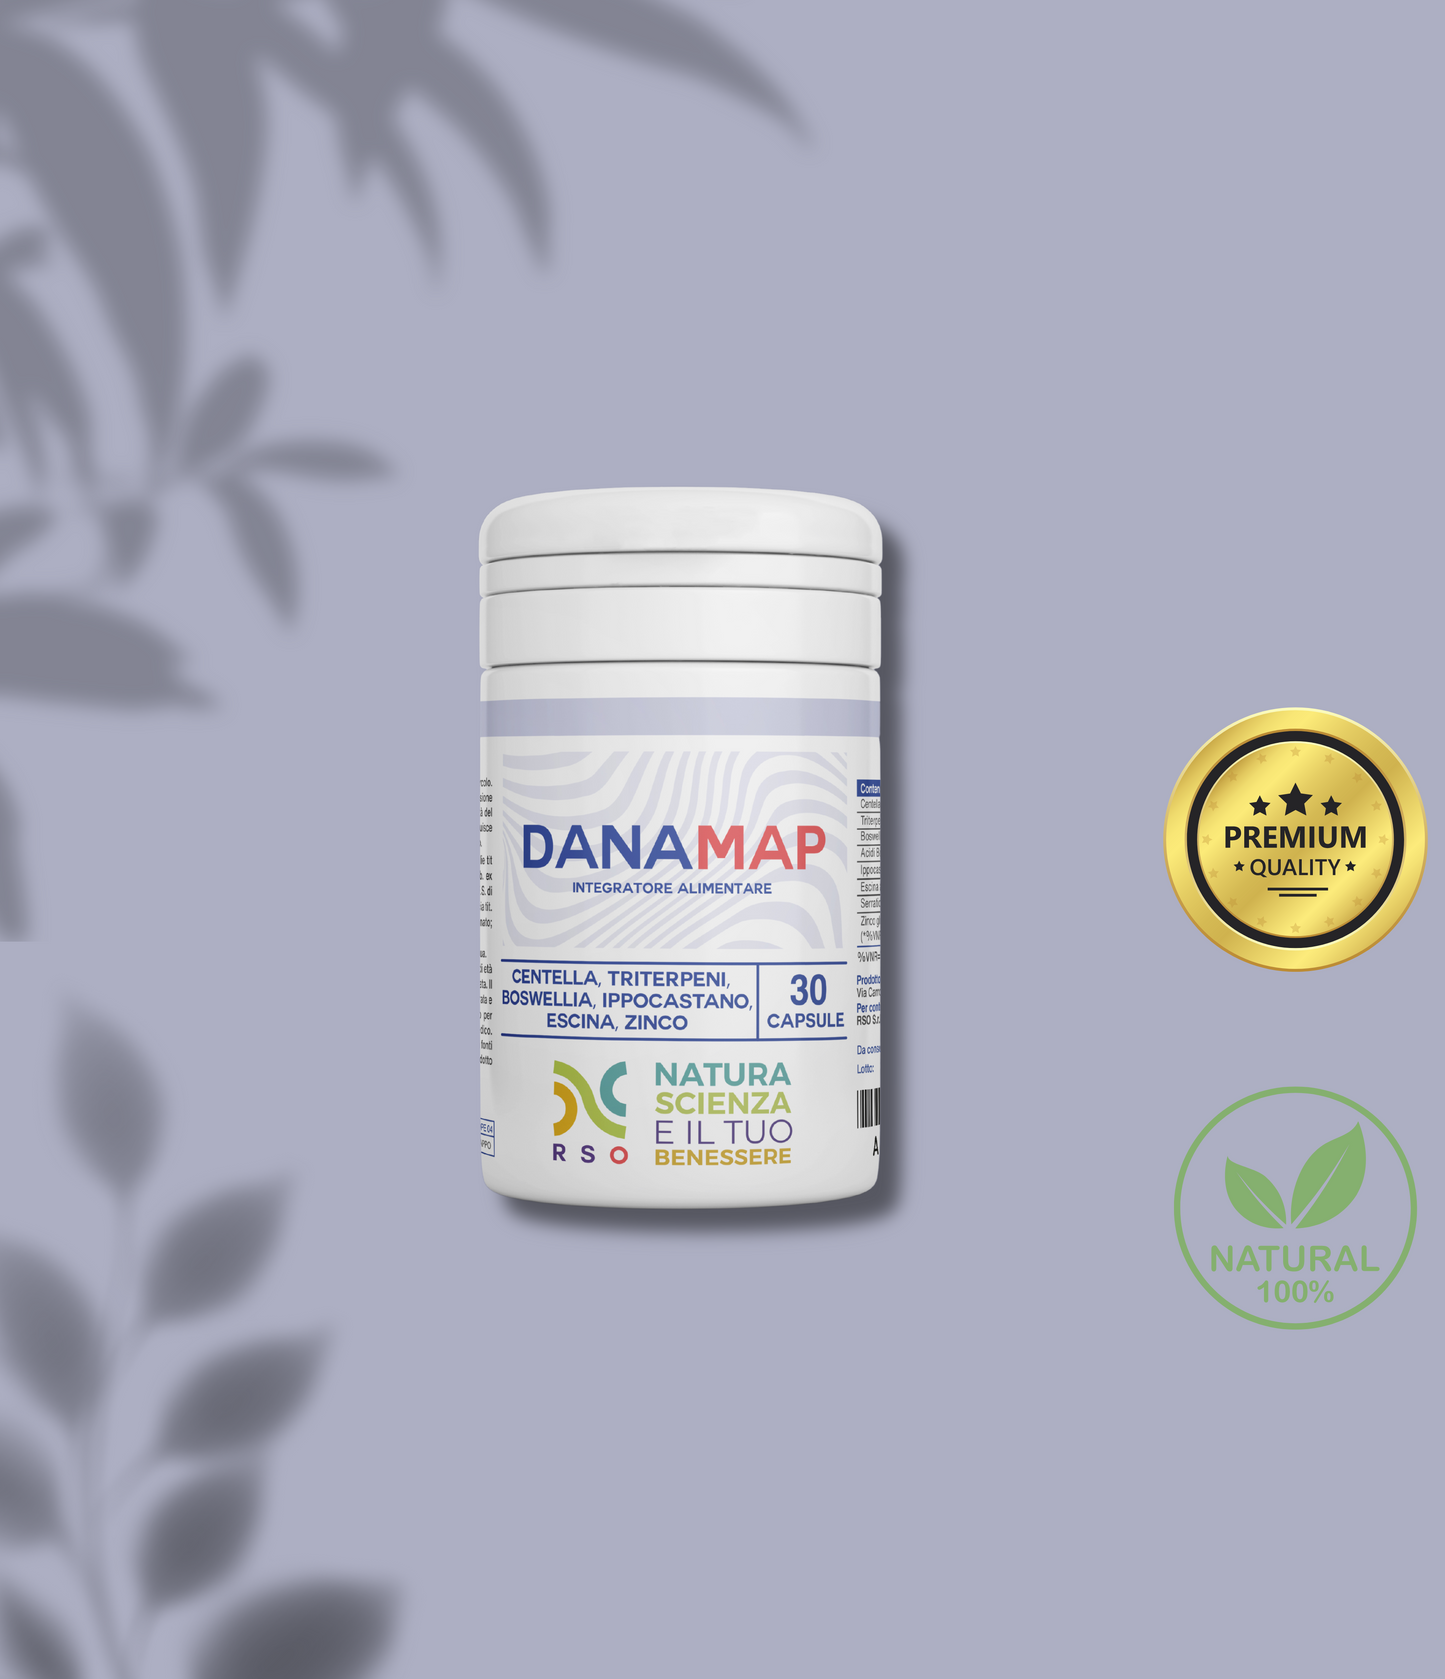 Danamap 30 CPS -  Antinfiammatorio, antidolorifico e antiedemigeno